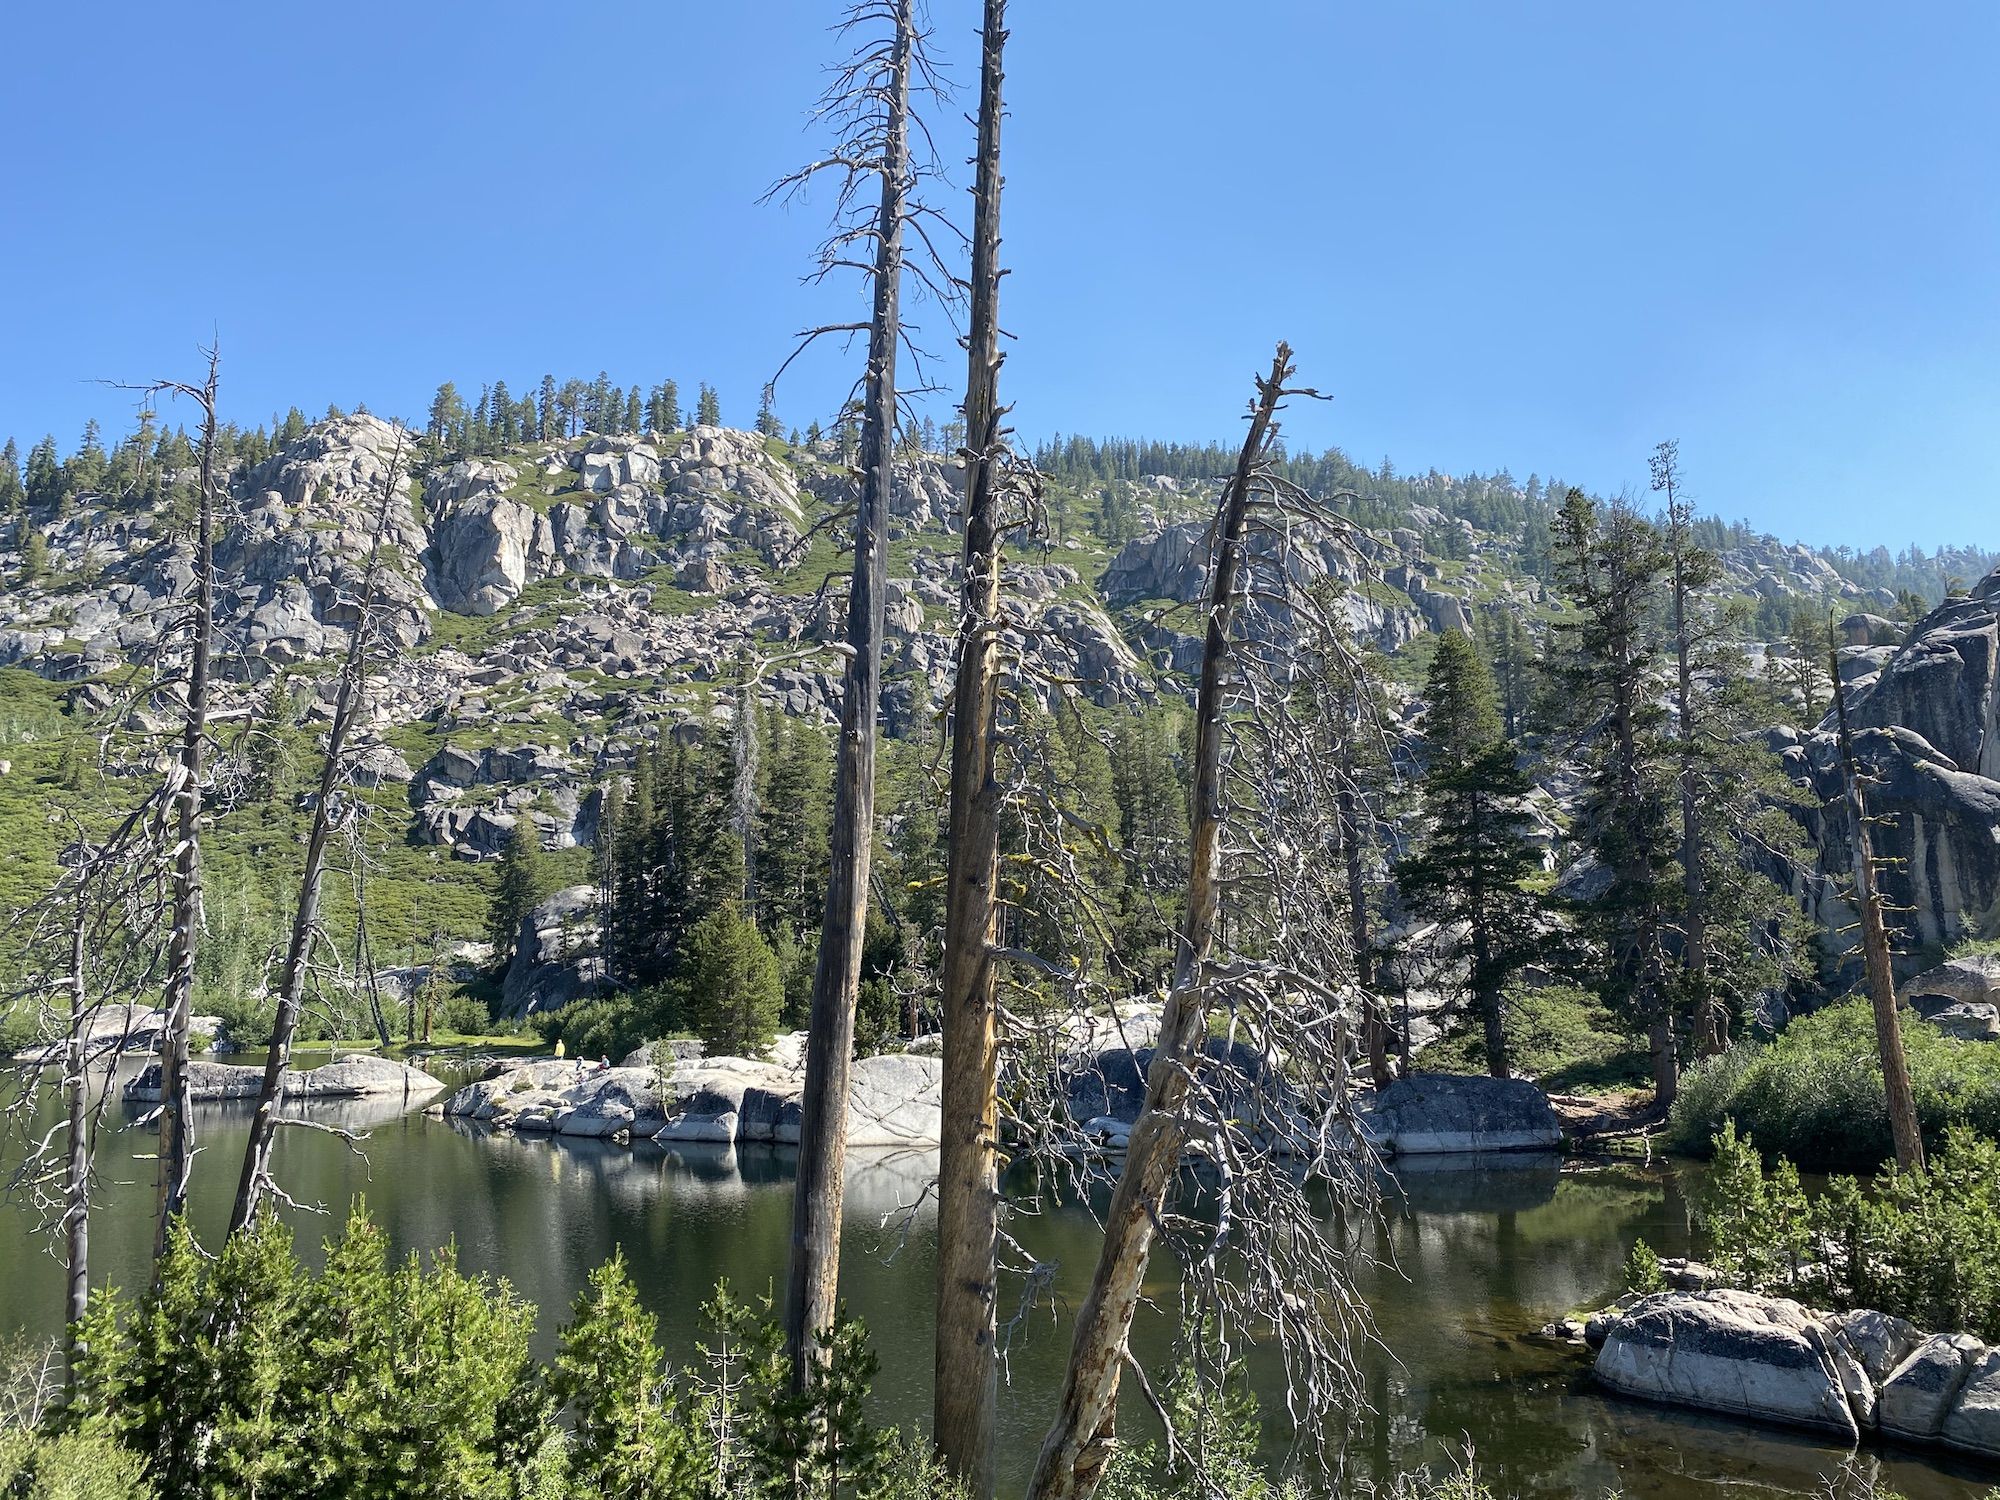 An alpine lake behind trees.